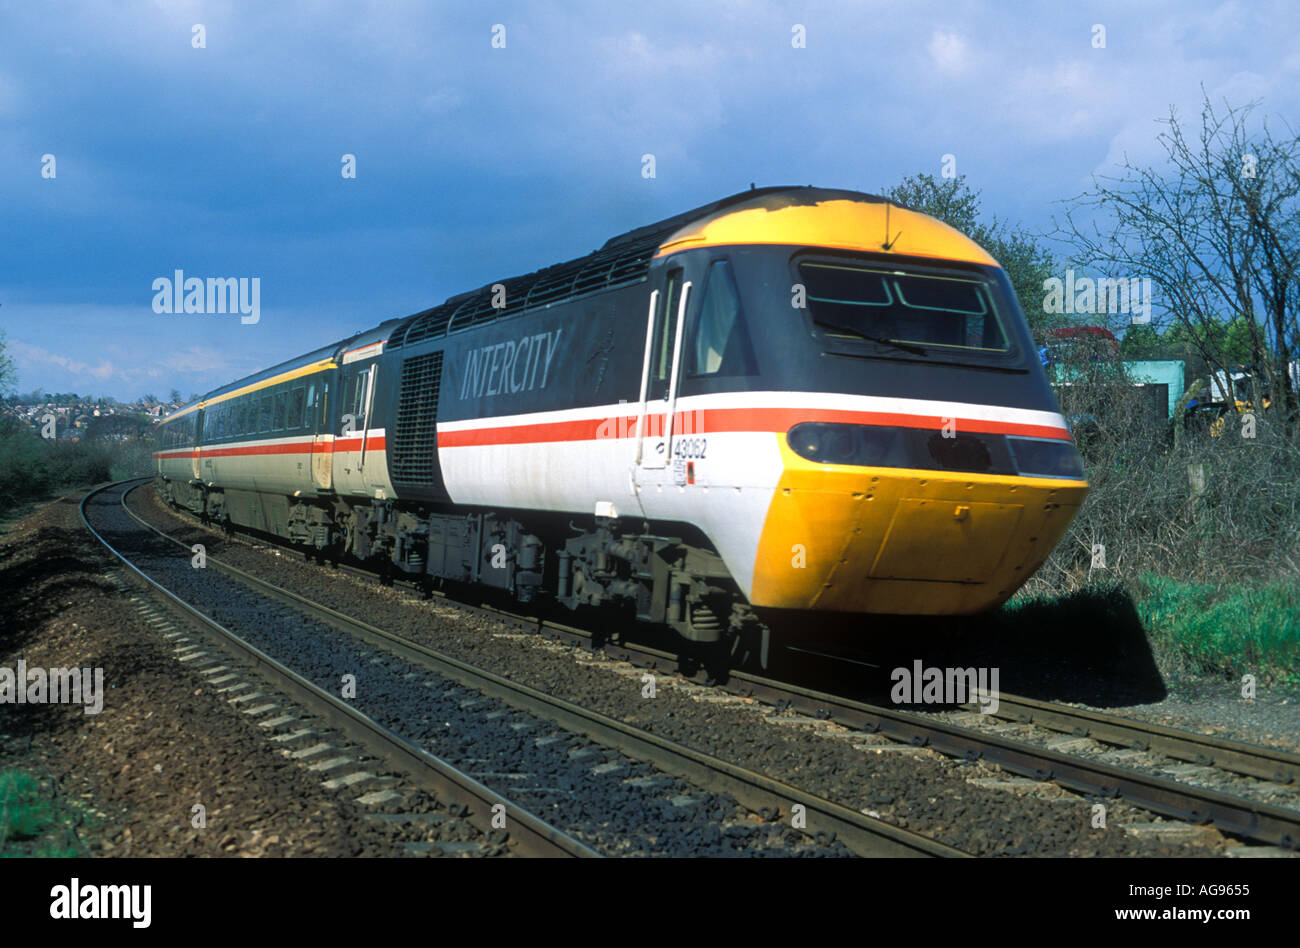 British Rail Intercity 125 HST Train Leicestershire England Stock Photo